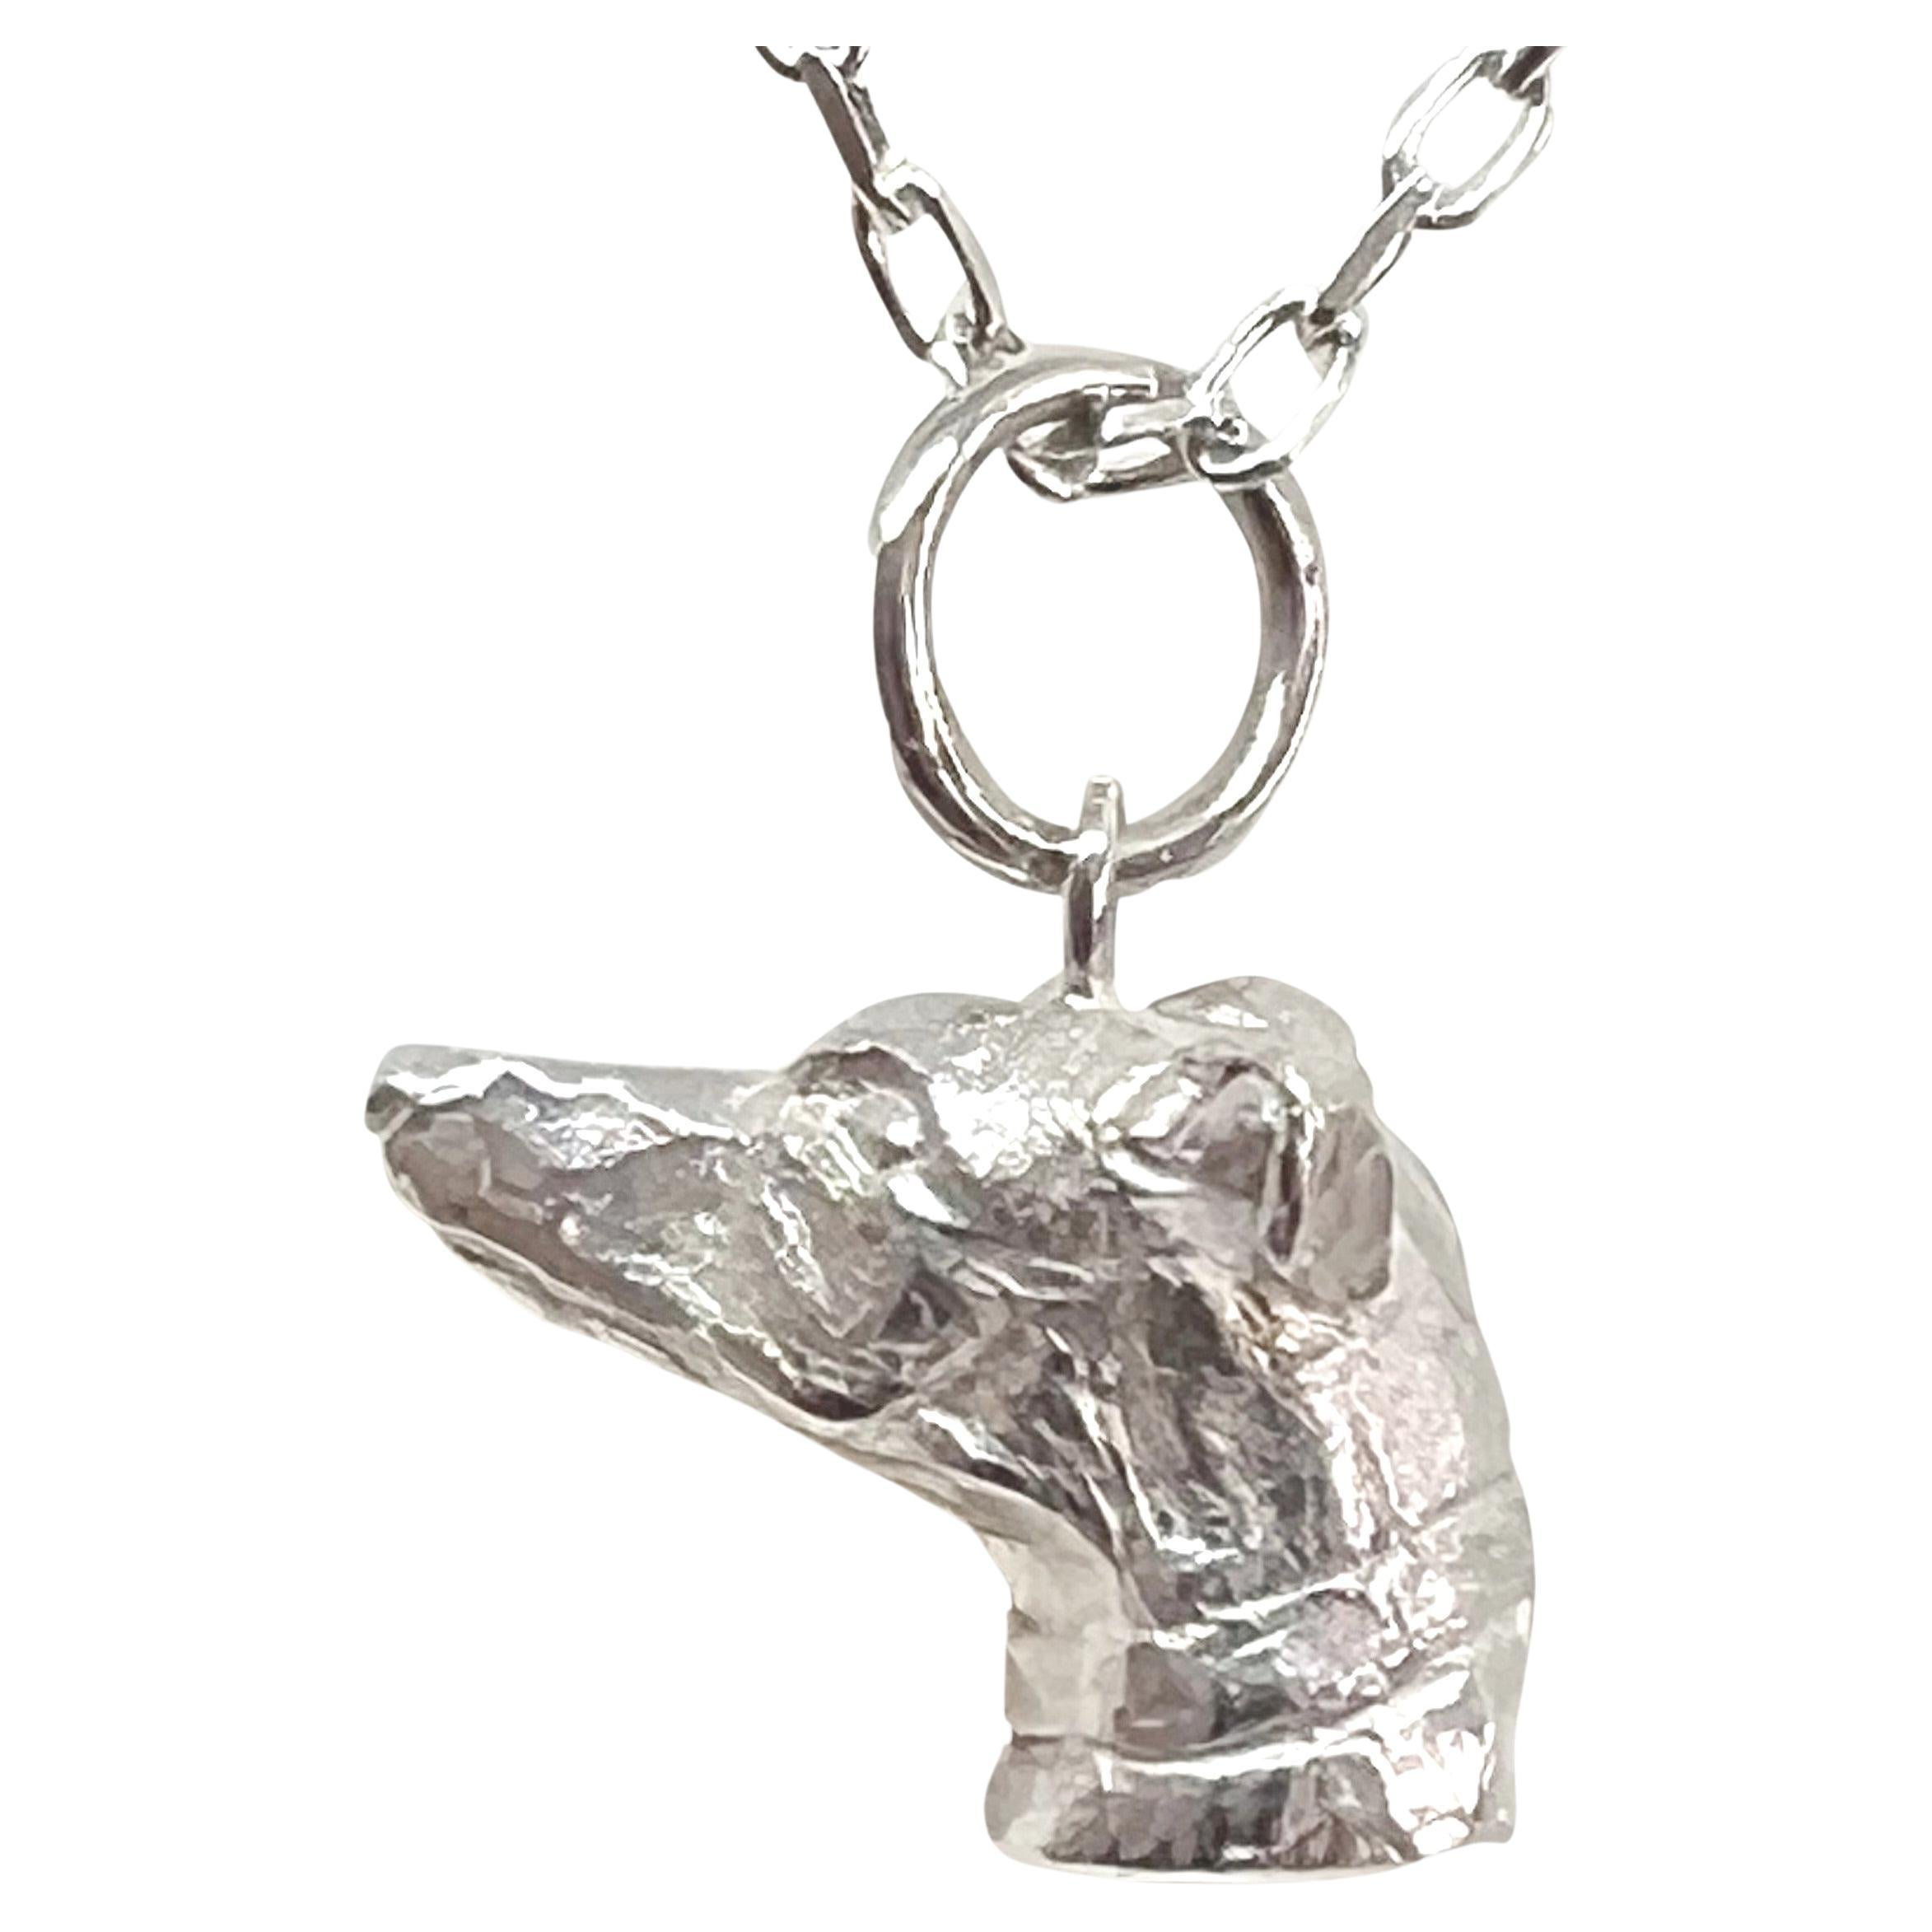 Paul Eaton 'England' Anhänger Sterling Silber Miniatur Windhund Hundekopf